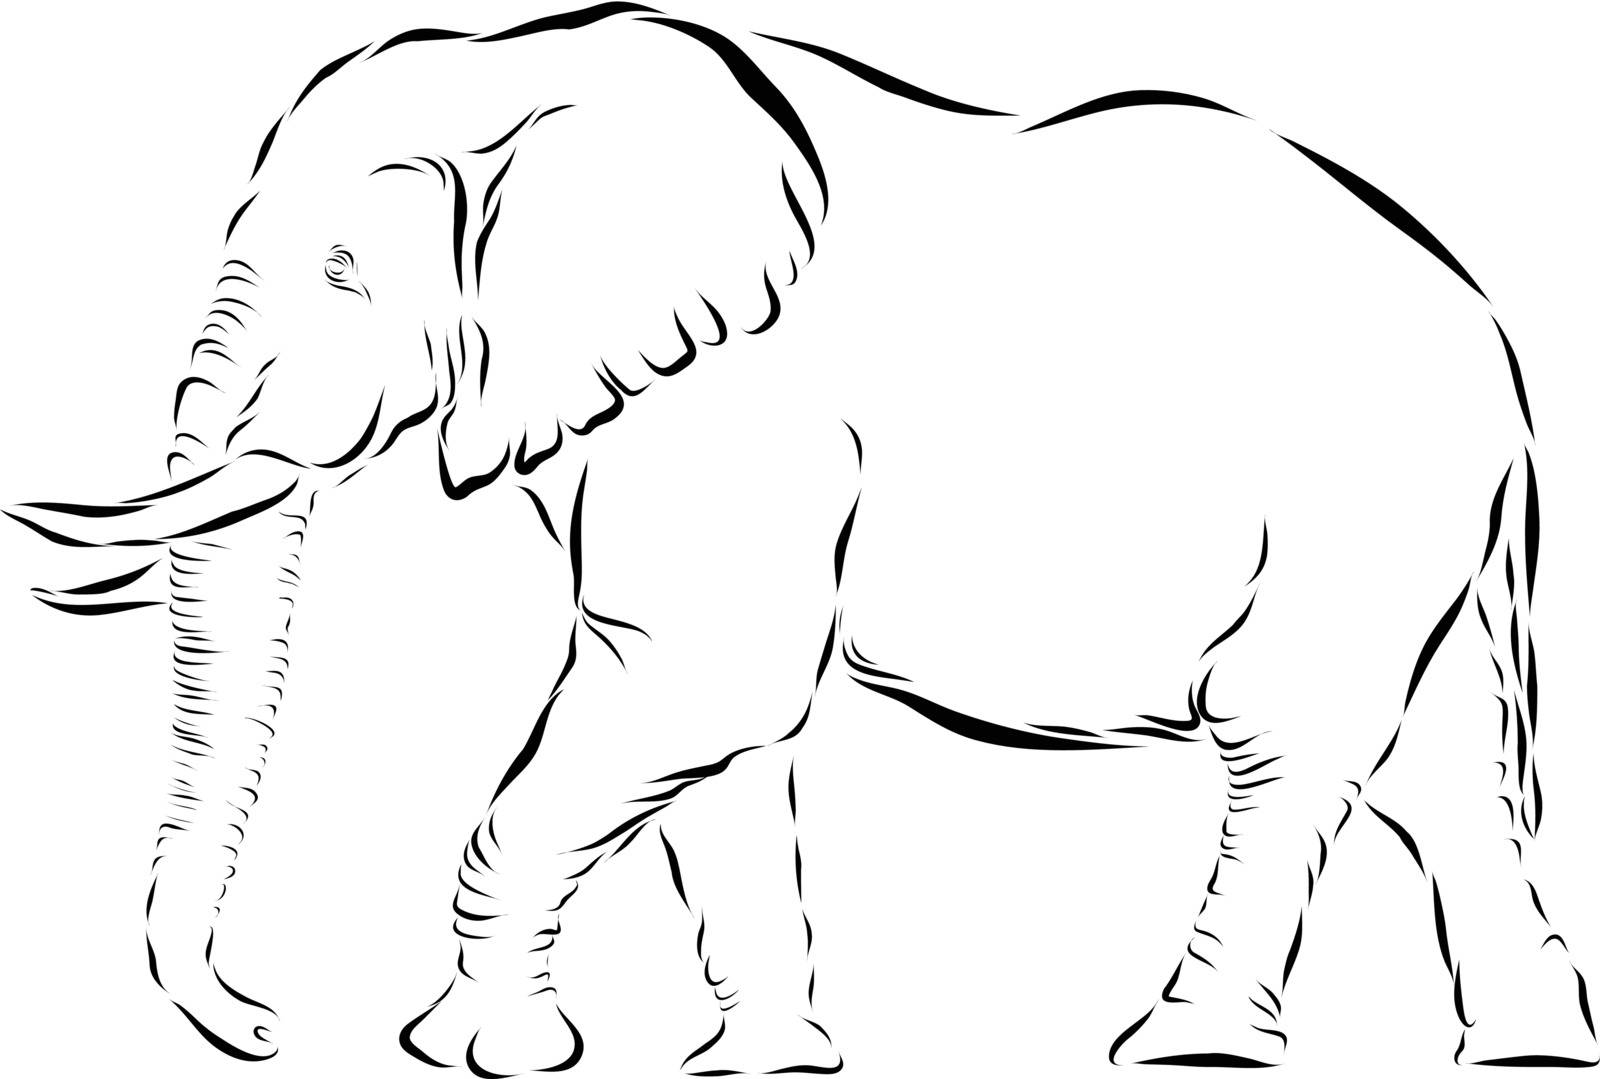 Vector line art illustration of an African elephant